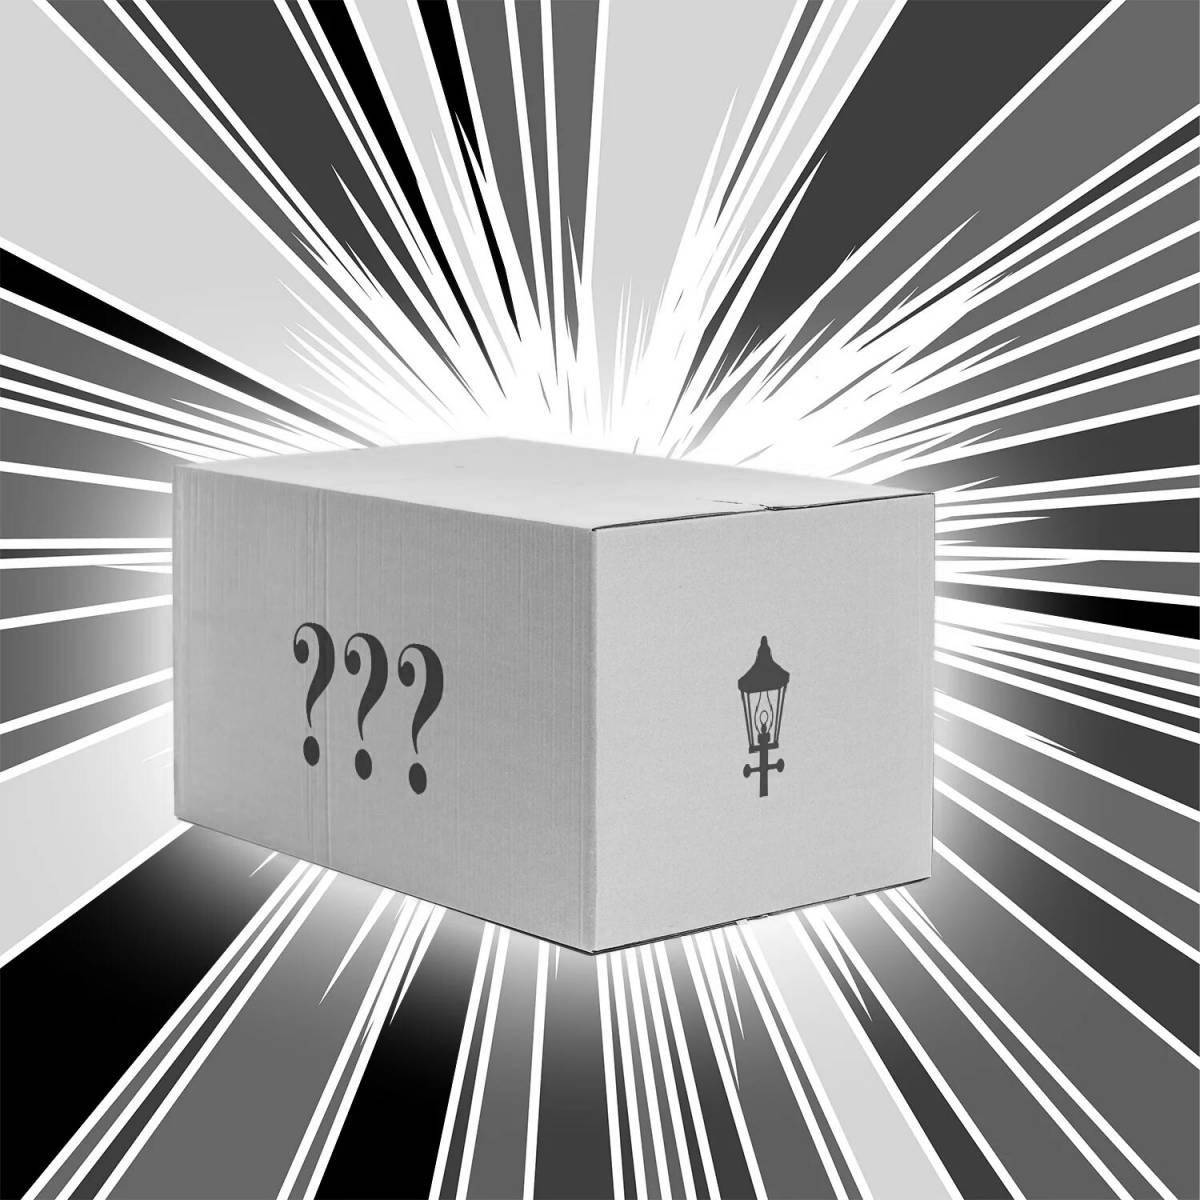 Charon mystery box #2